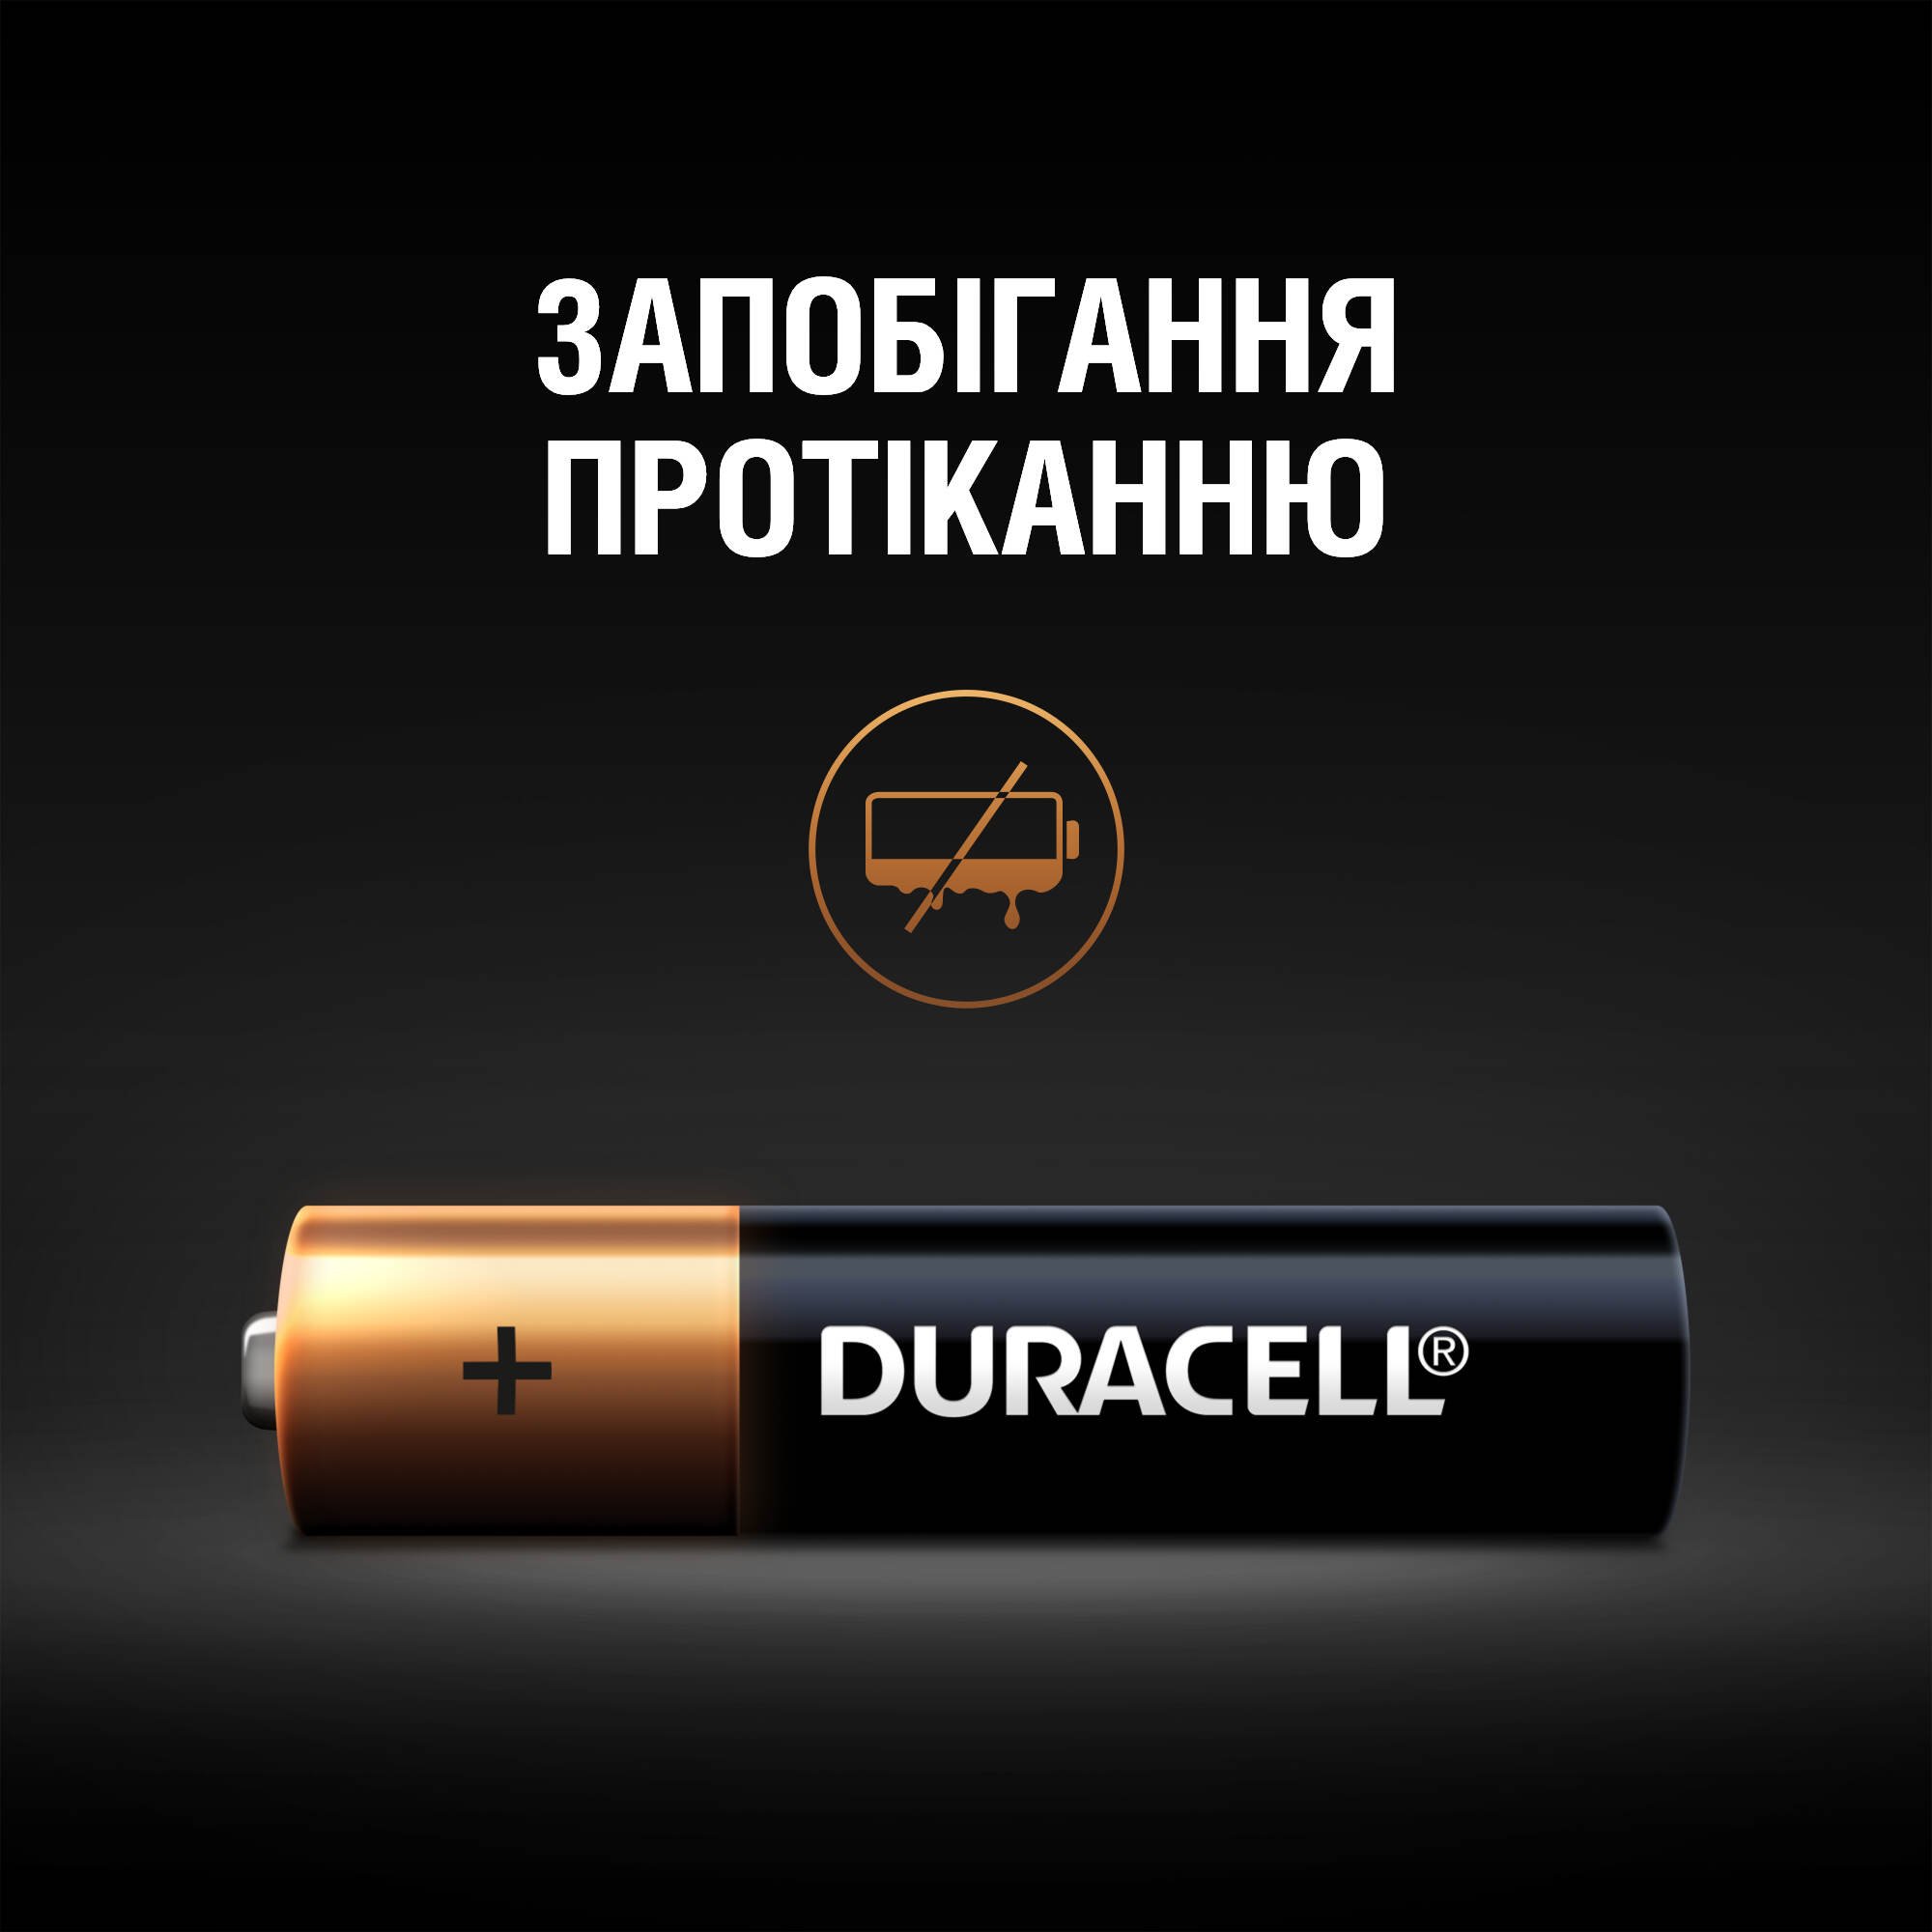 Щелочные батарейки мизинчиковые Duracell 1,5 V AAA LR03/MN2400, 2 шт. (706007) - фото 3